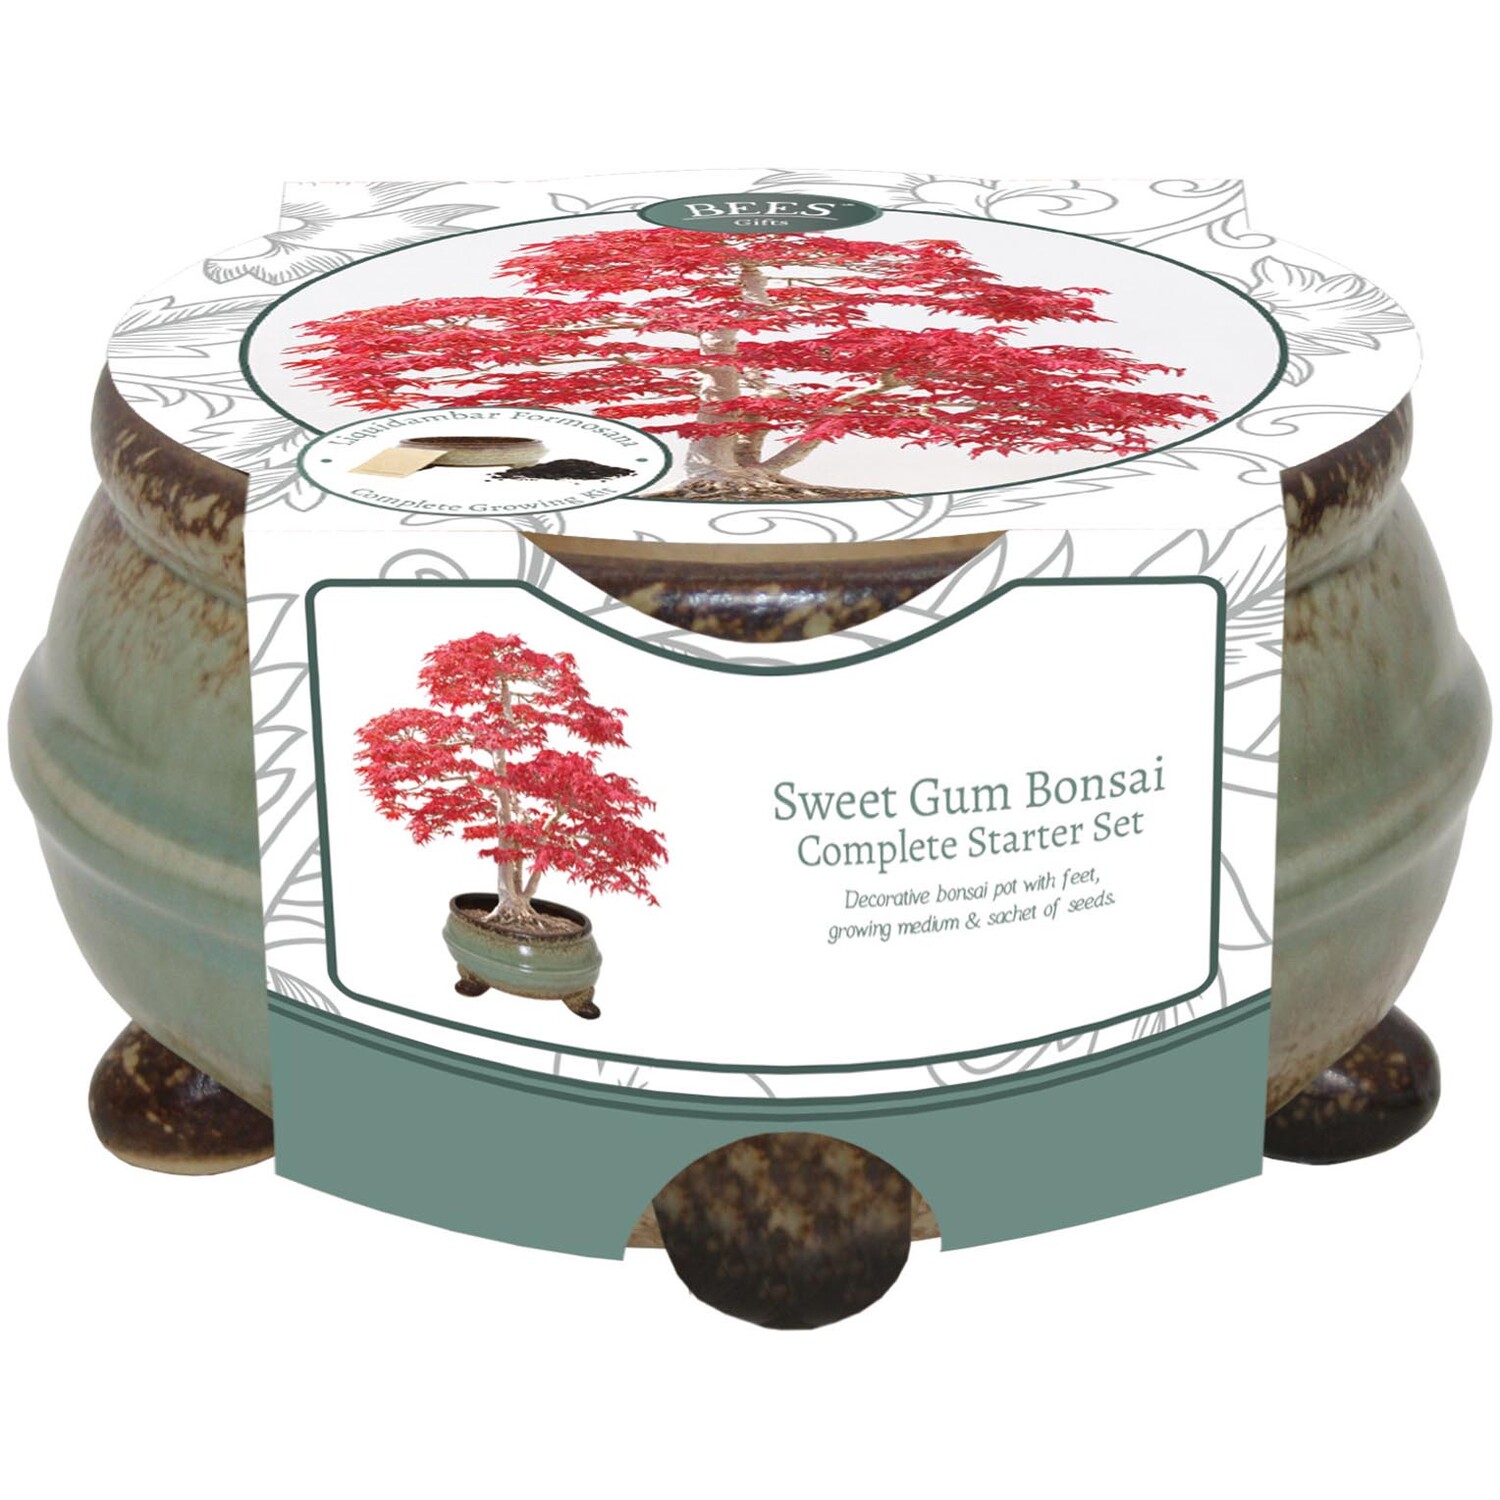 Sweet Gum Bonsai Bowl with Legs - Green Image